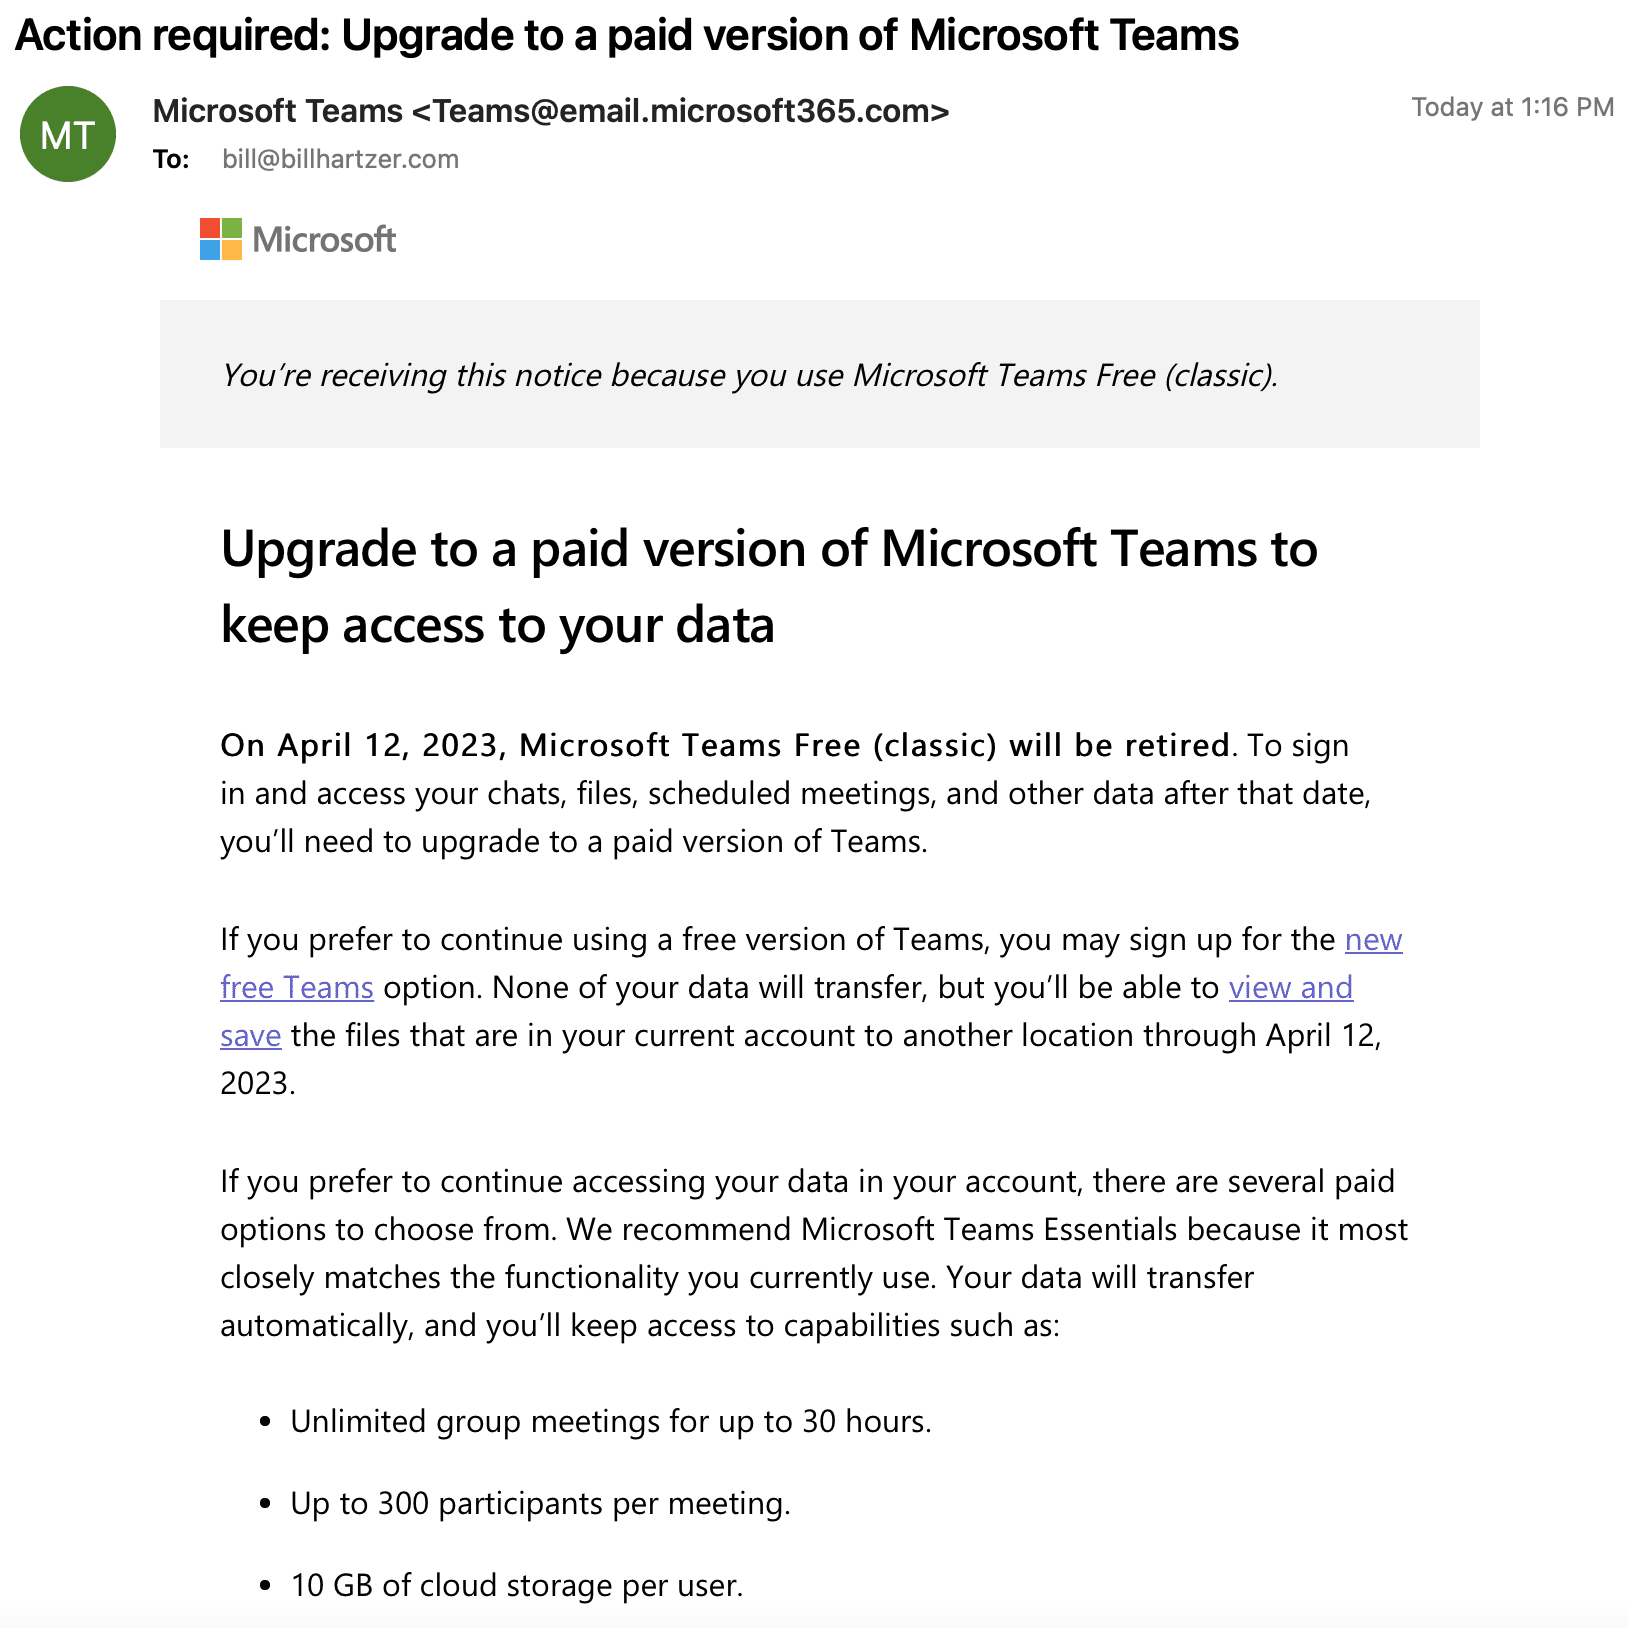 Microsoft Teams Free Classic shutting down